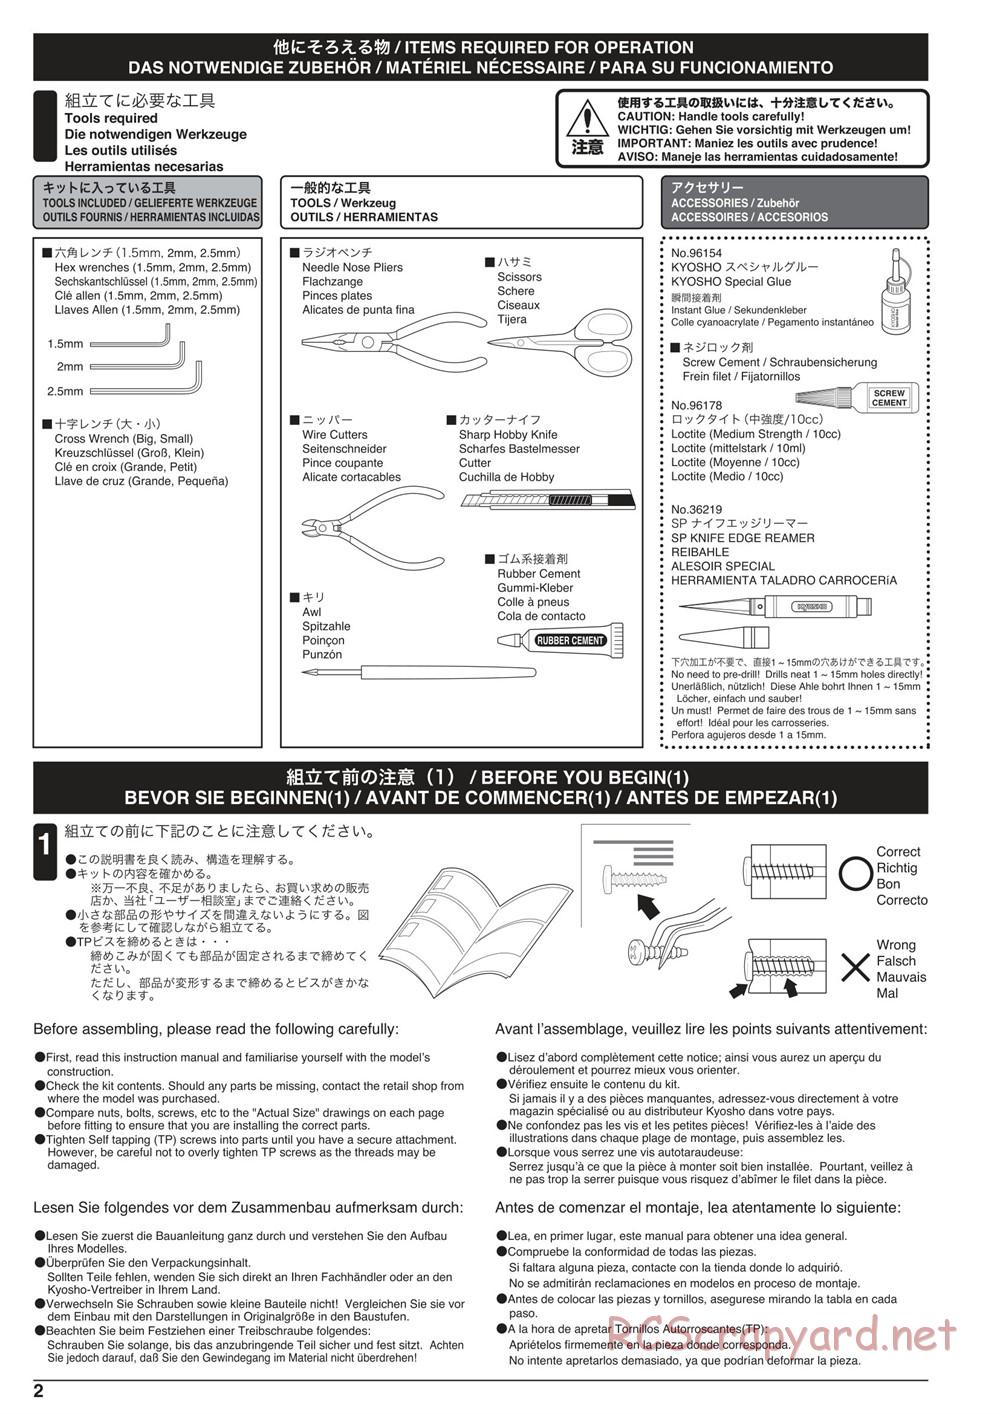 Kyosho - Scorpion XXL Nitro - Manual - Page 2